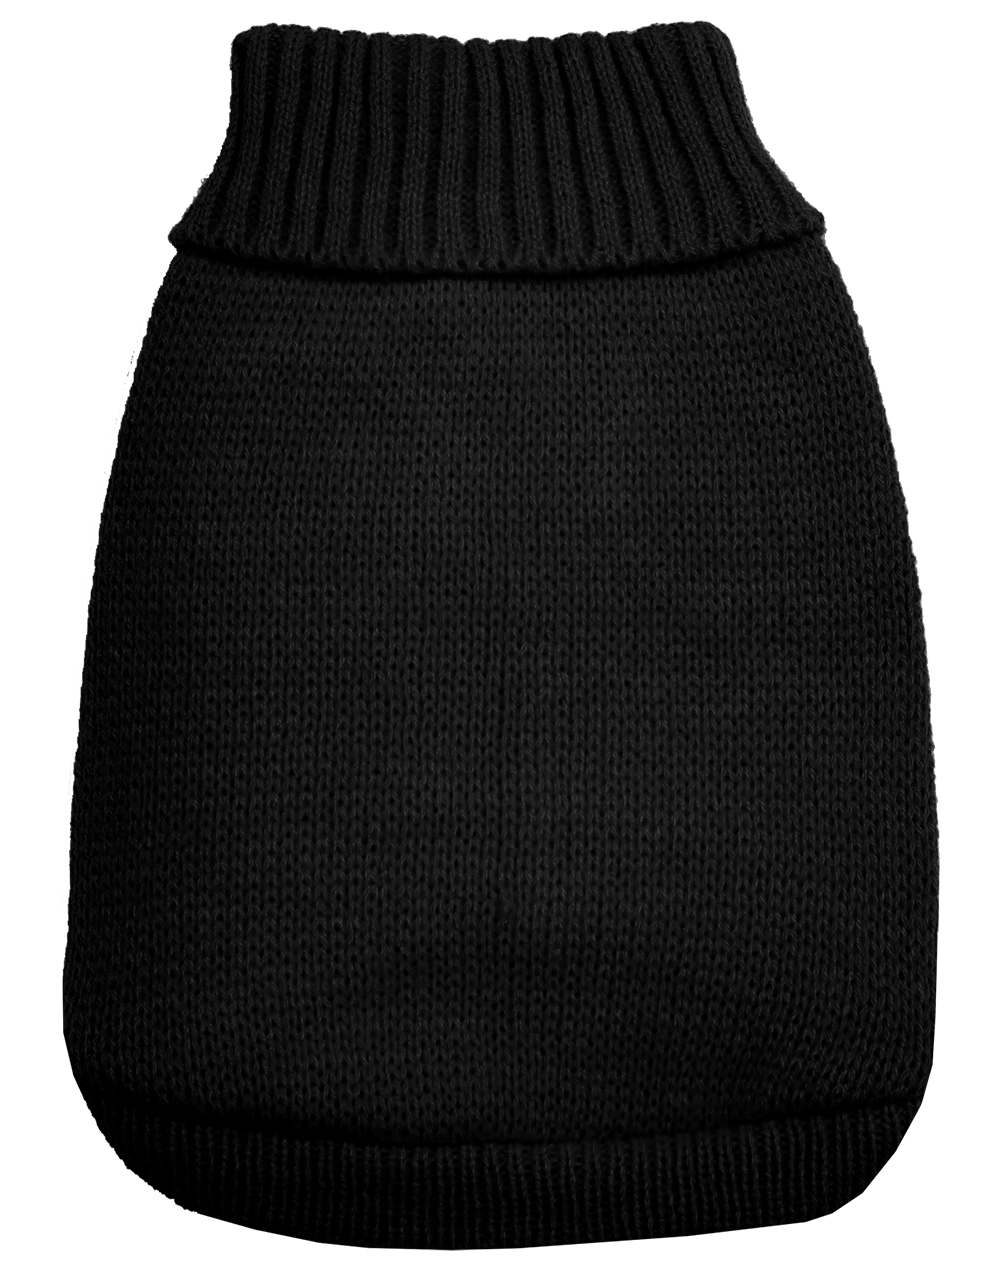 Knit Pet Sweater Black Size 5X